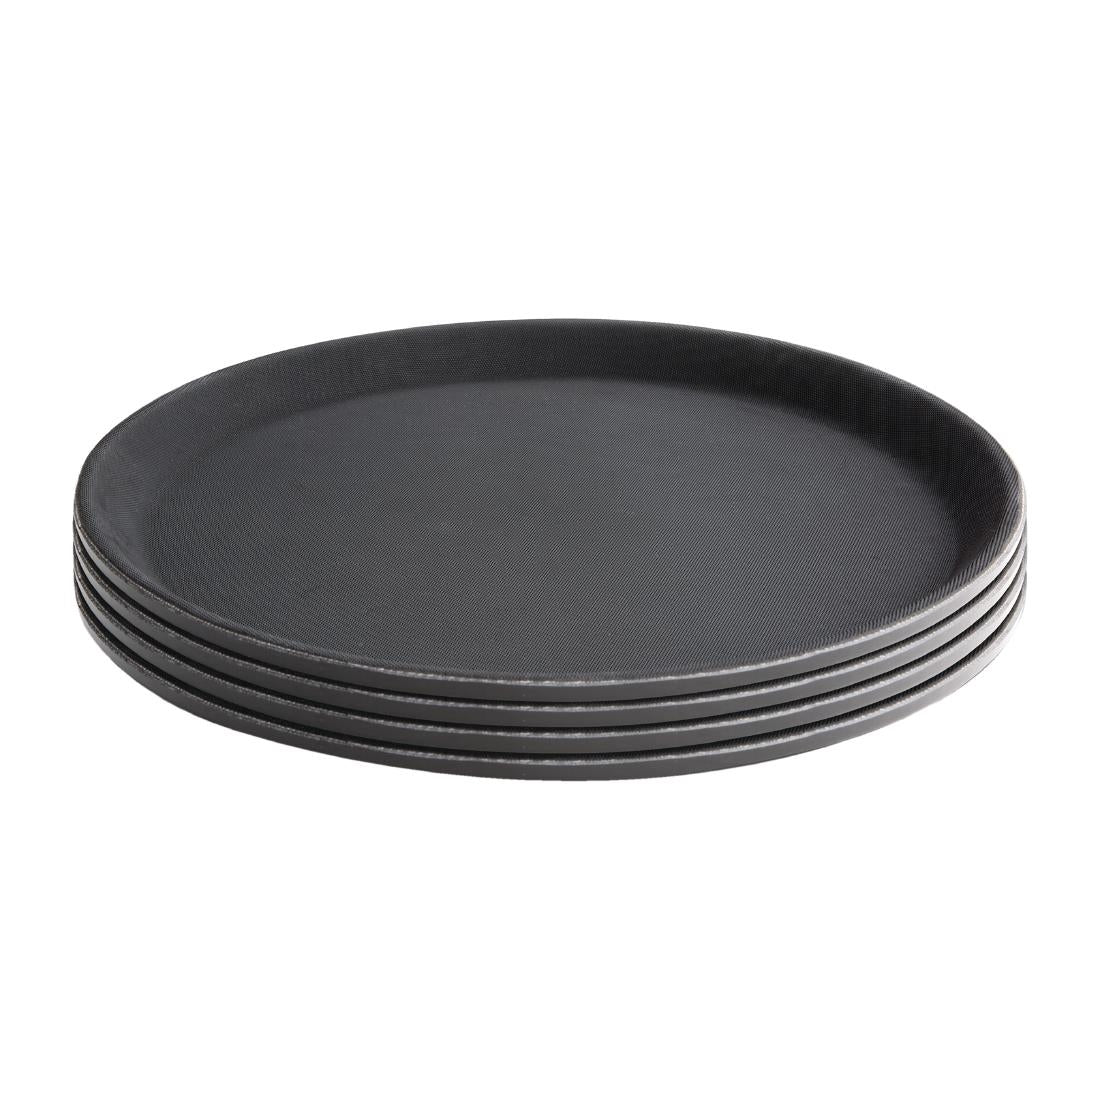 Kristallon Fibreglass Round Non-Slip Tray Black 356mm JD Catering Equipment Solutions Ltd